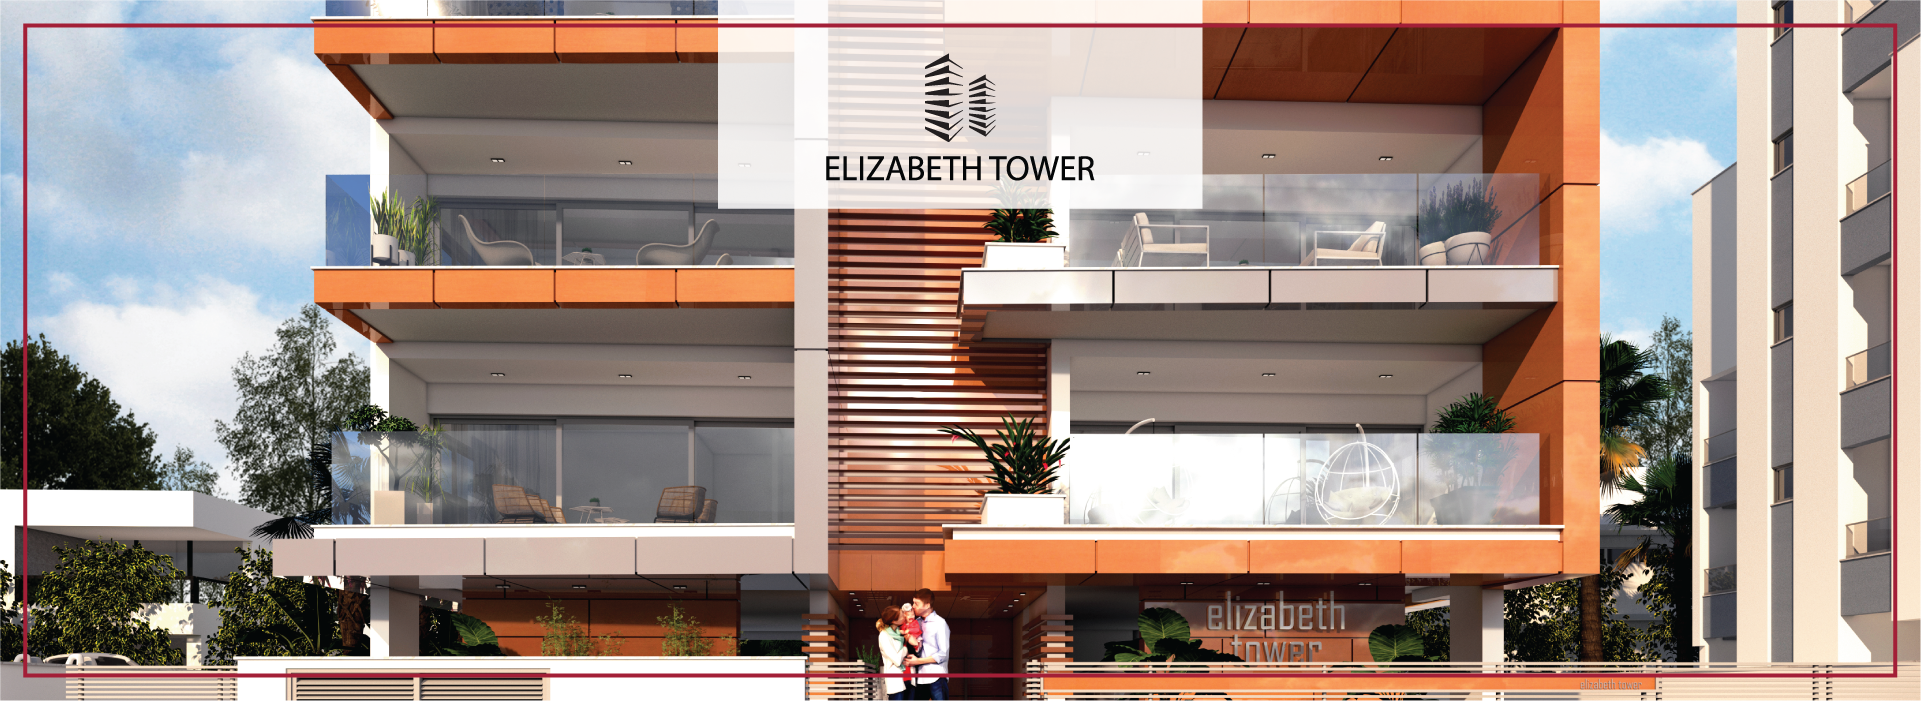 ELIZABETH TOWER